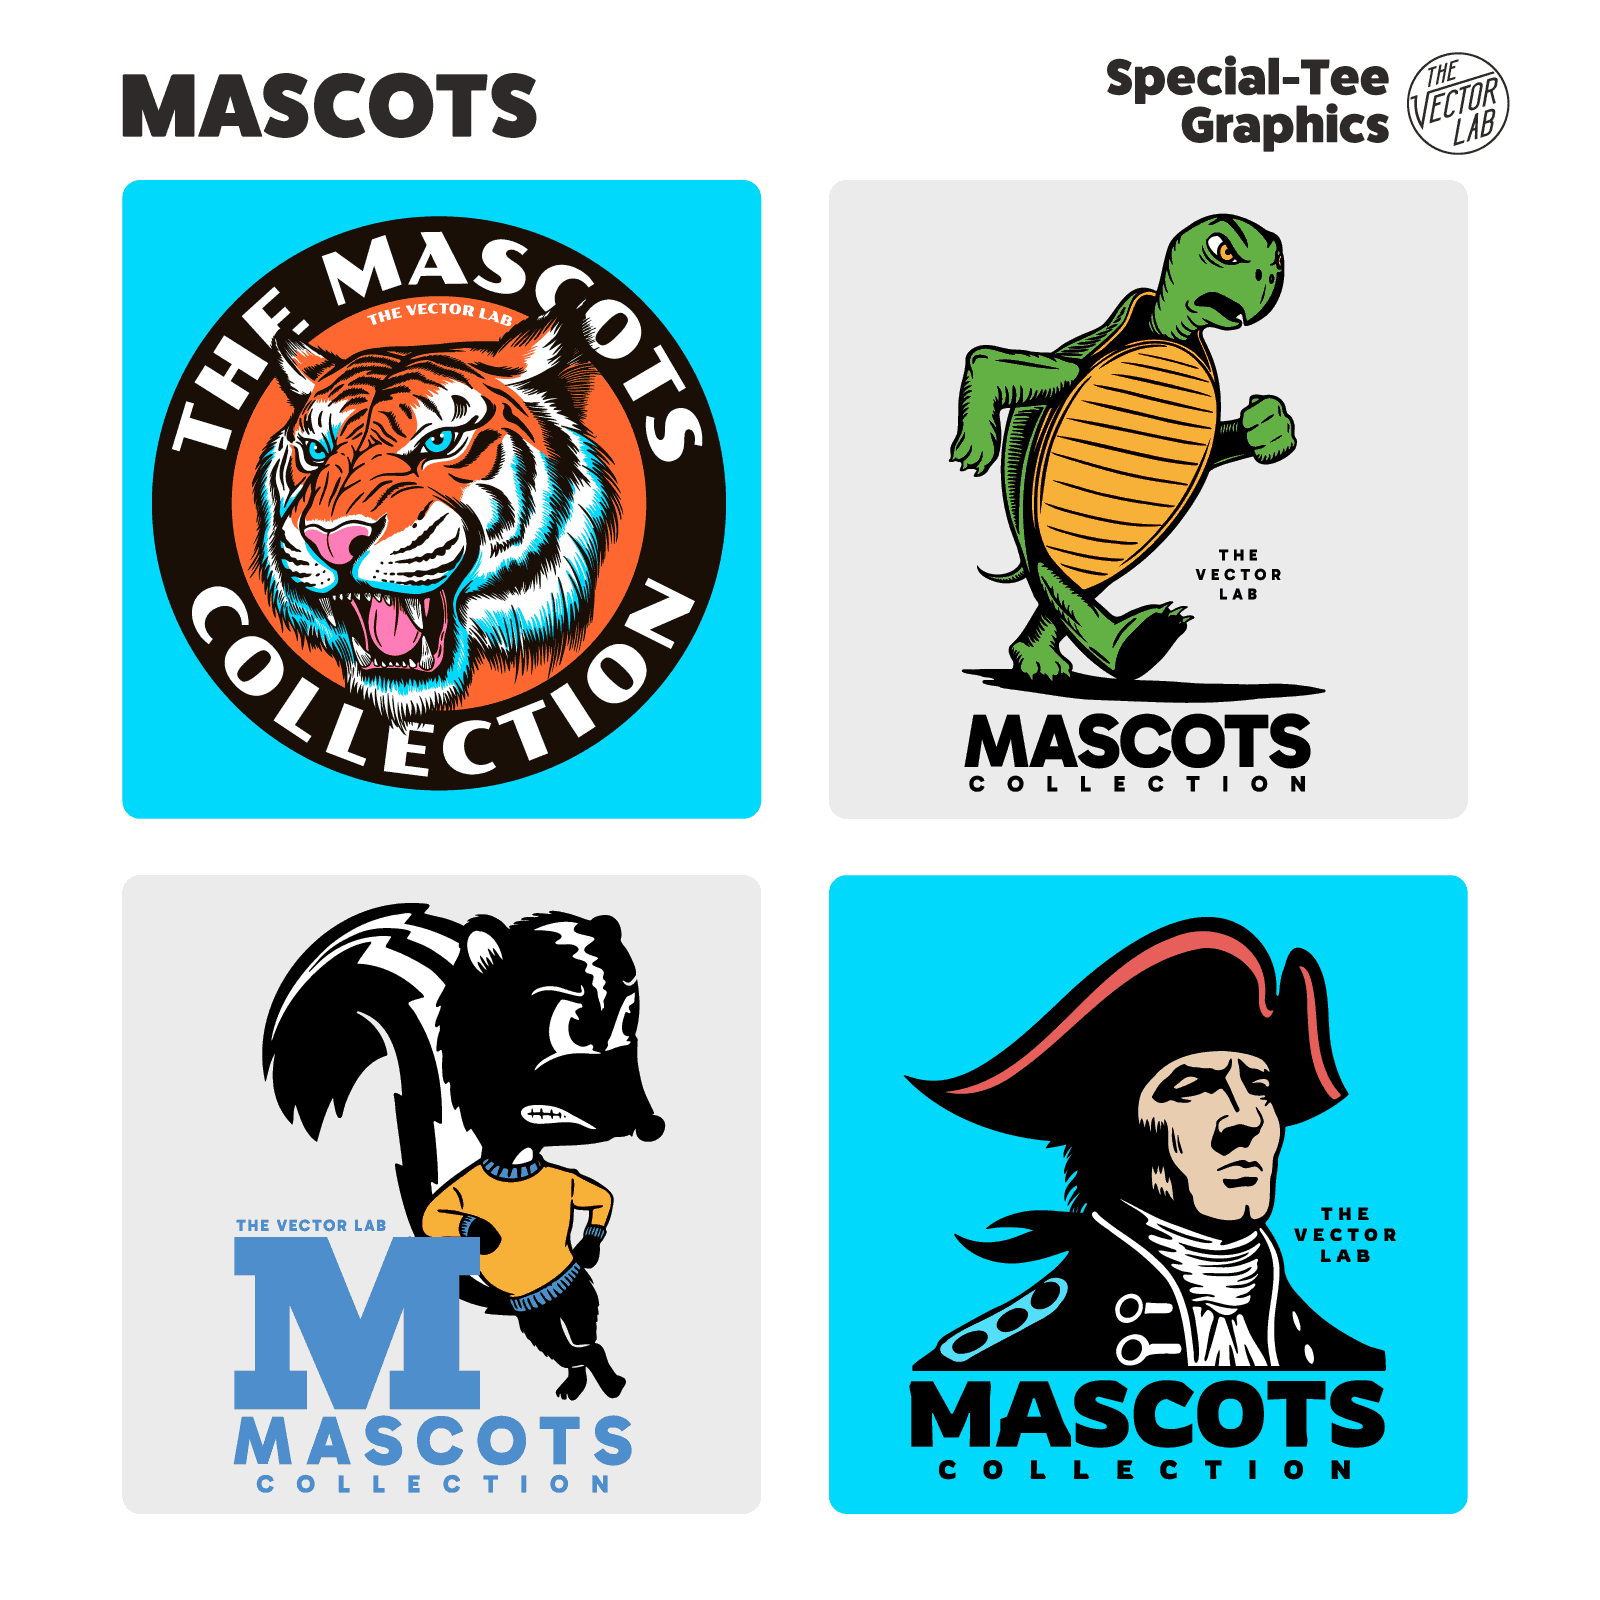 Mascots animals school spirit sports team graphic logo templates